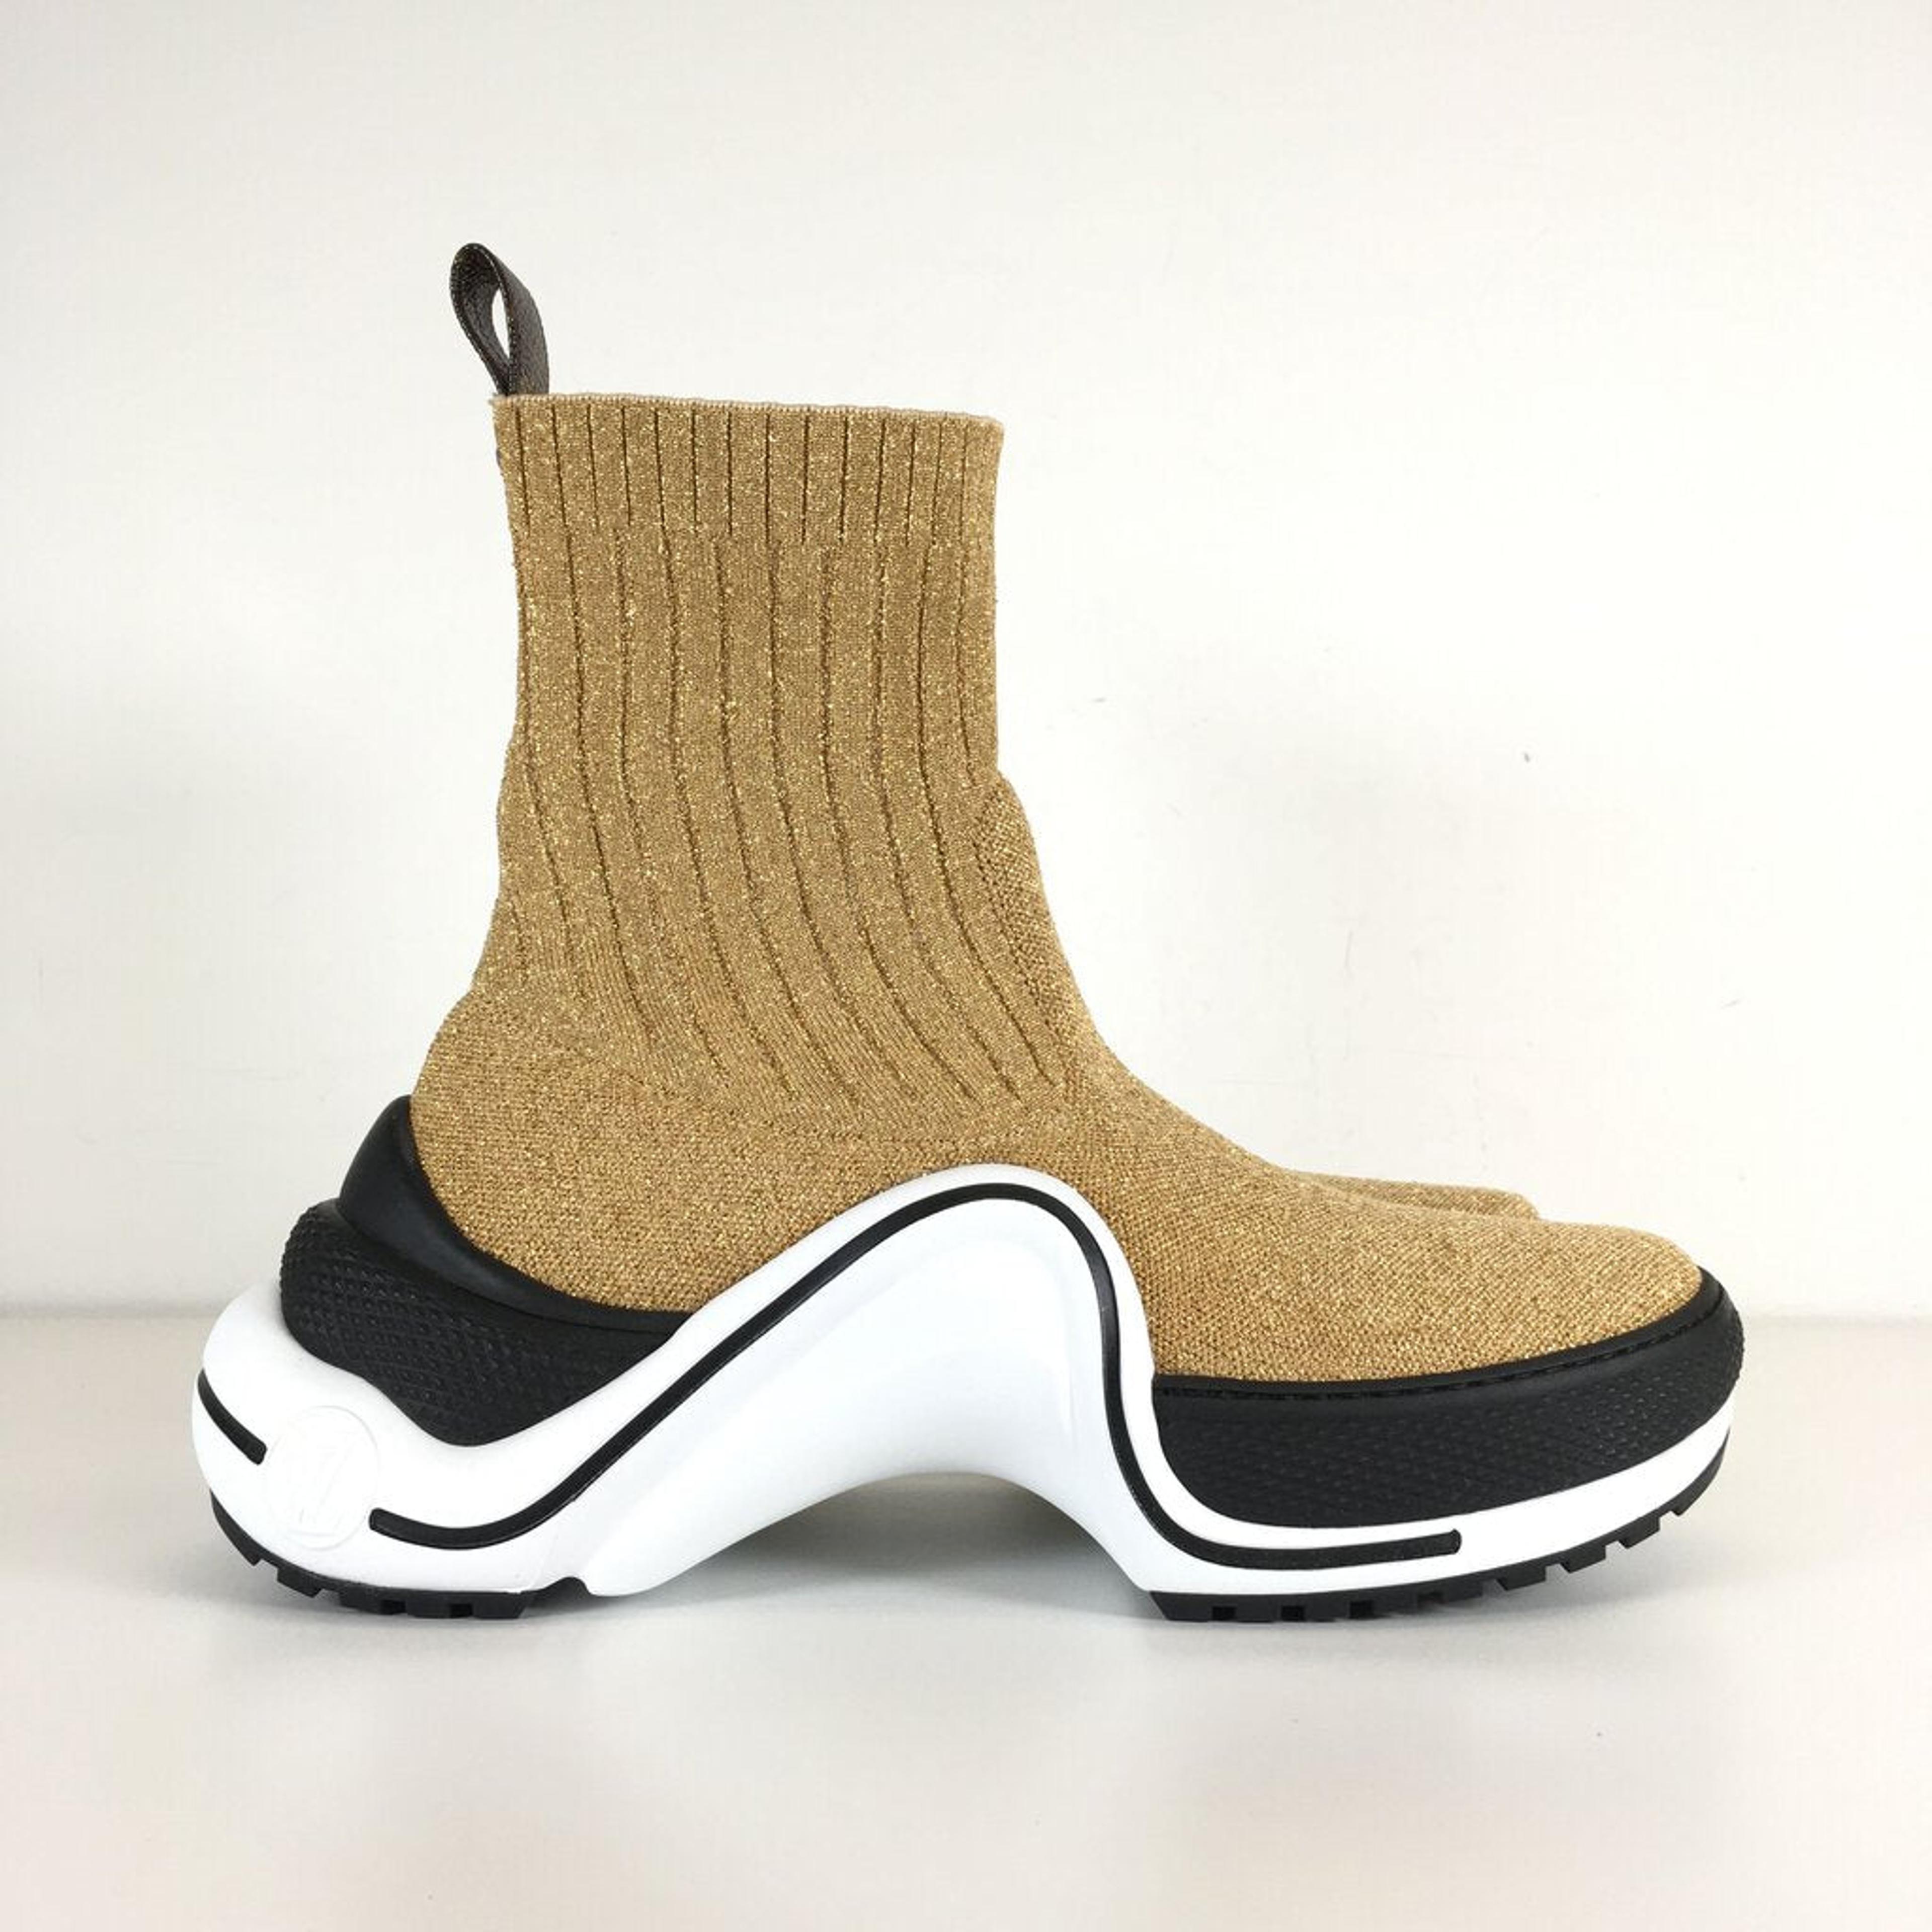 NTWRK - Louis Vuitton Archlight Sock Boots